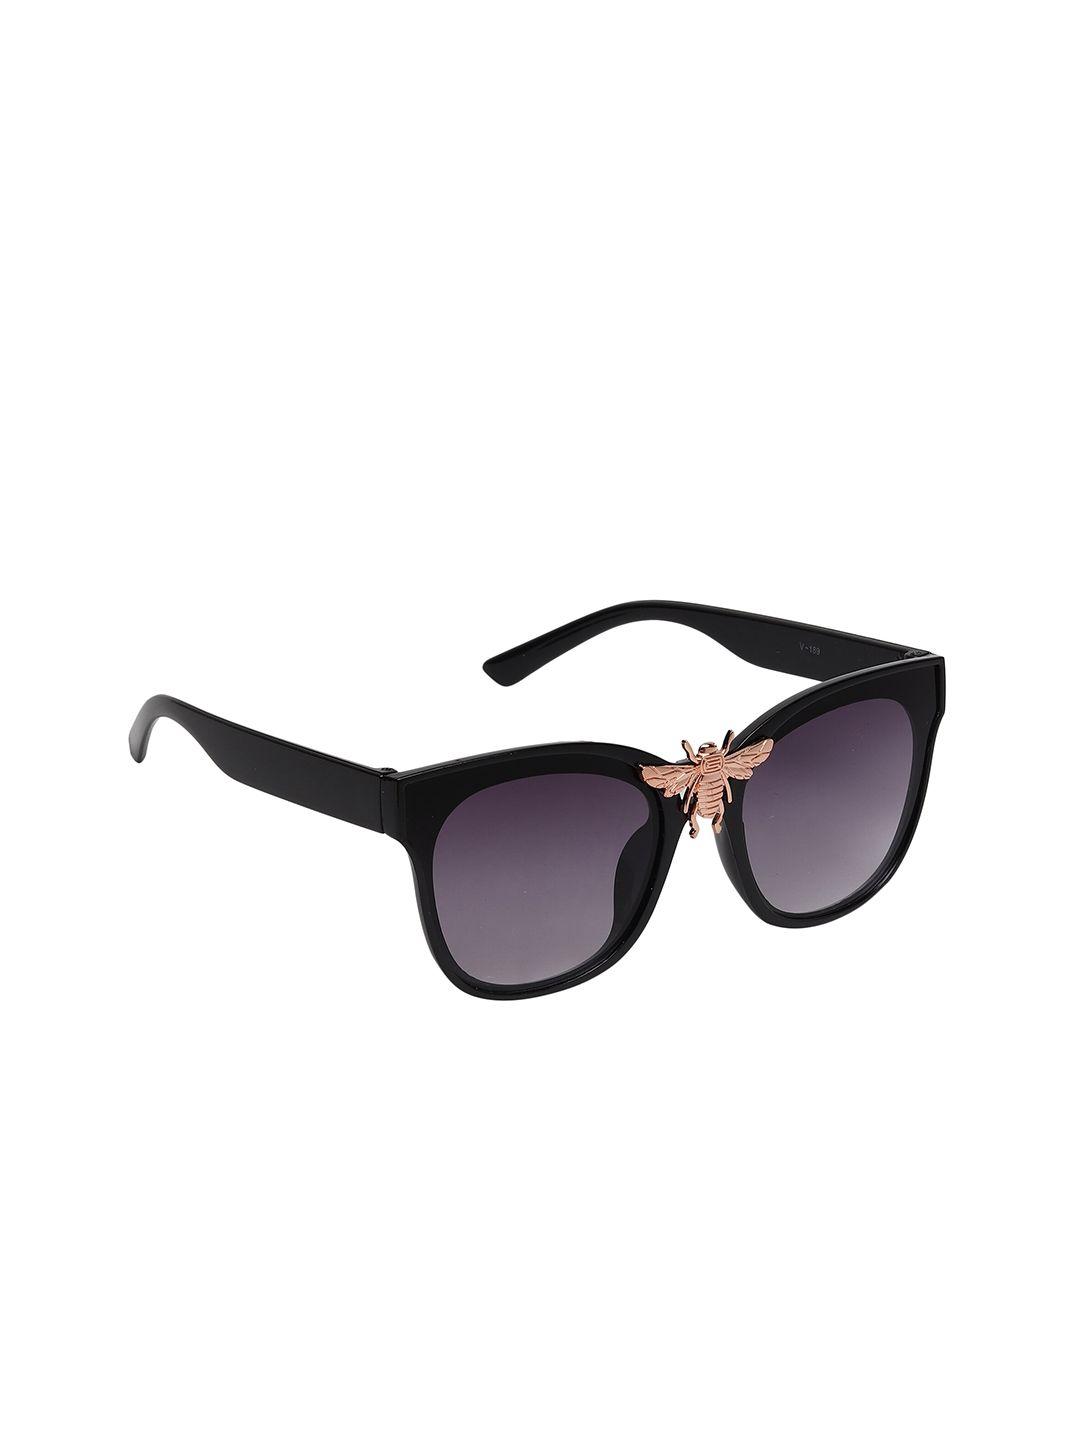 celebrity sunglasses unisex purple lens & black wayfarer sunglasses cl-if-nora-c-01